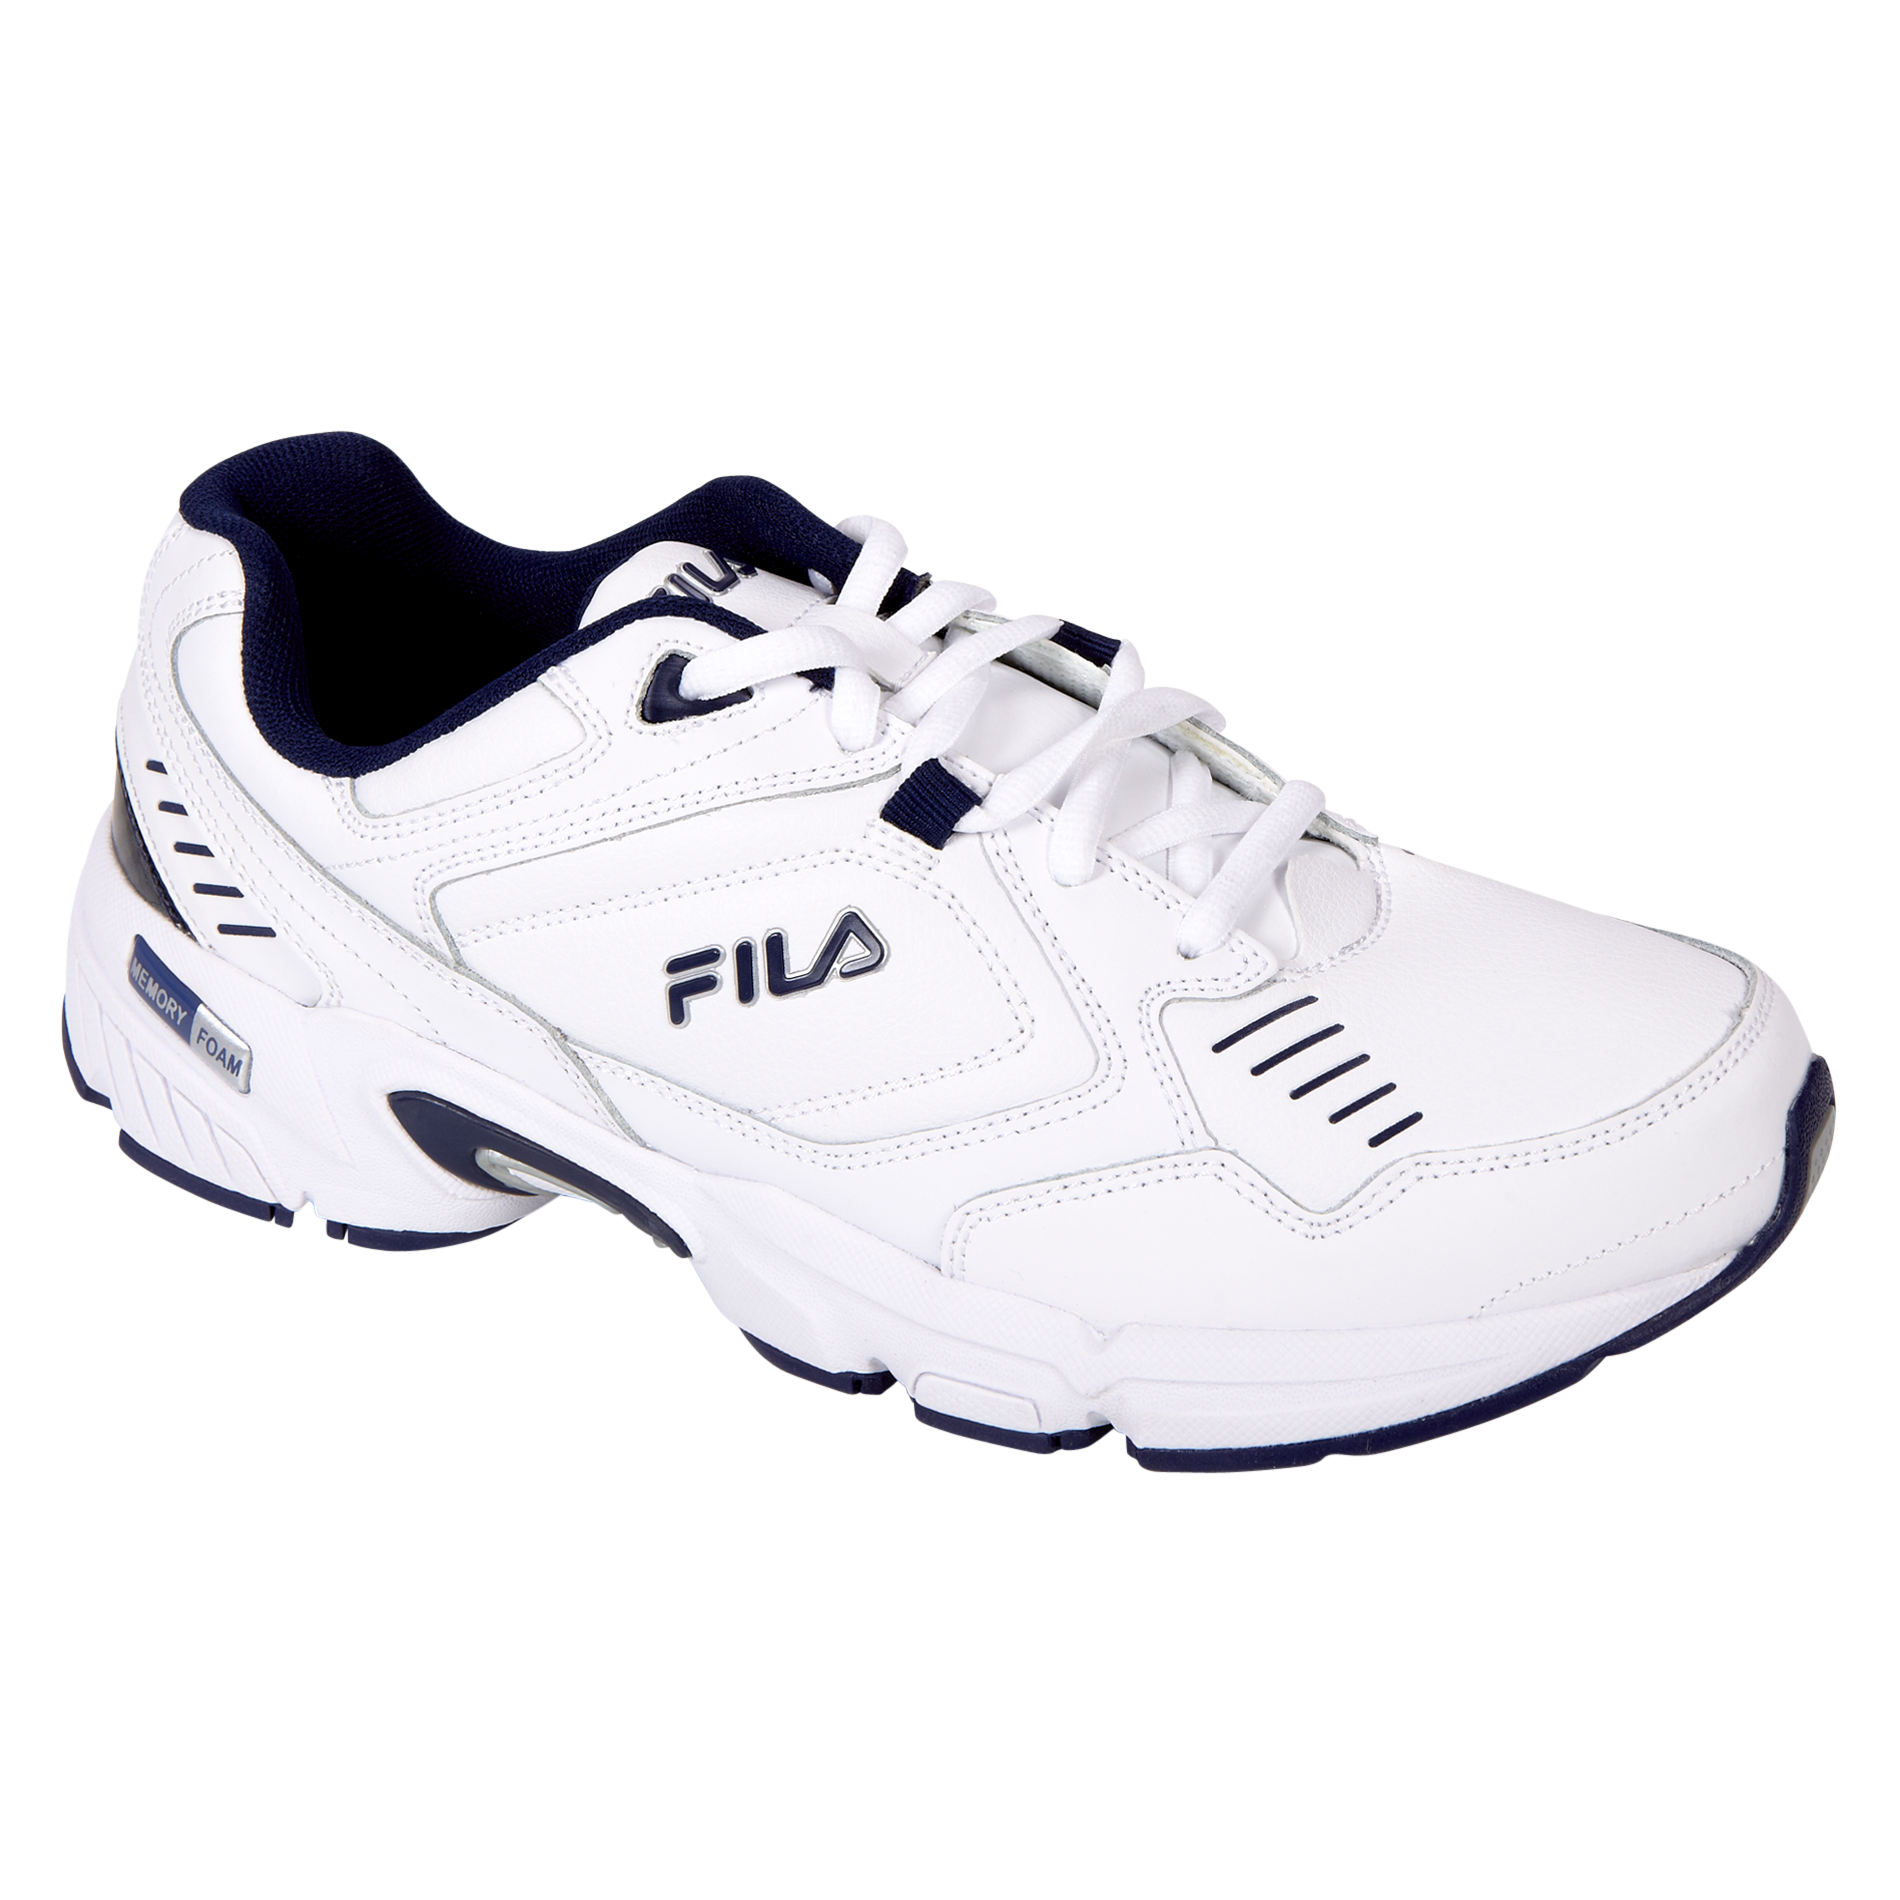 Fila Men's Athletic Shoe Memory Comfort Train Widie Width - White